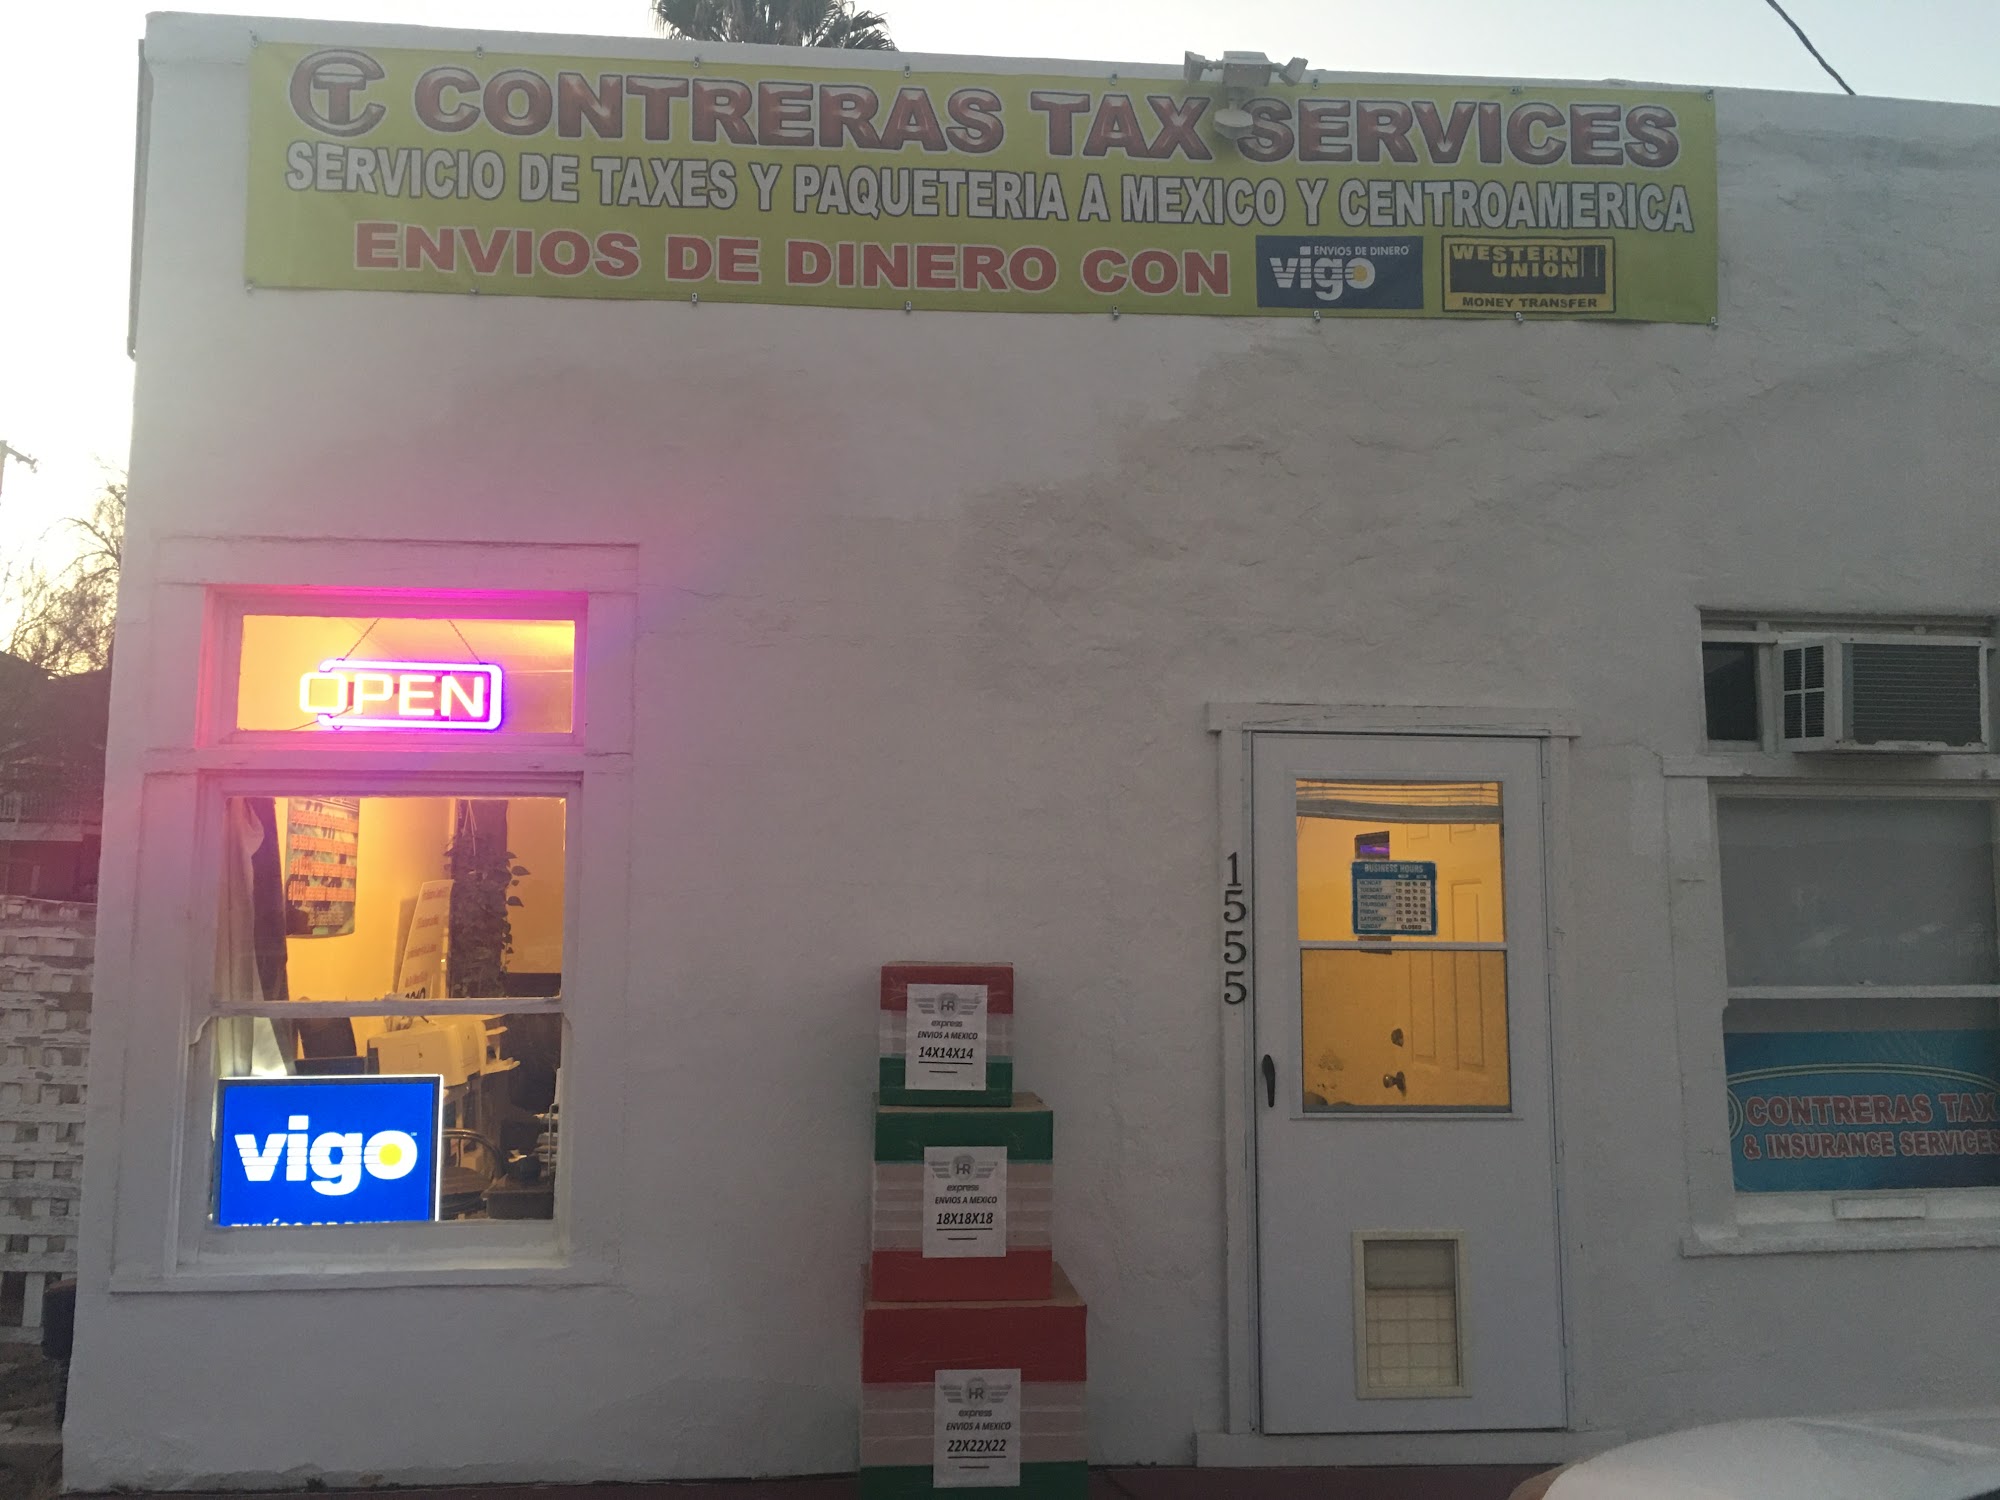 Contreras Tax Services 1555 Mission St, San Miguel California 93451